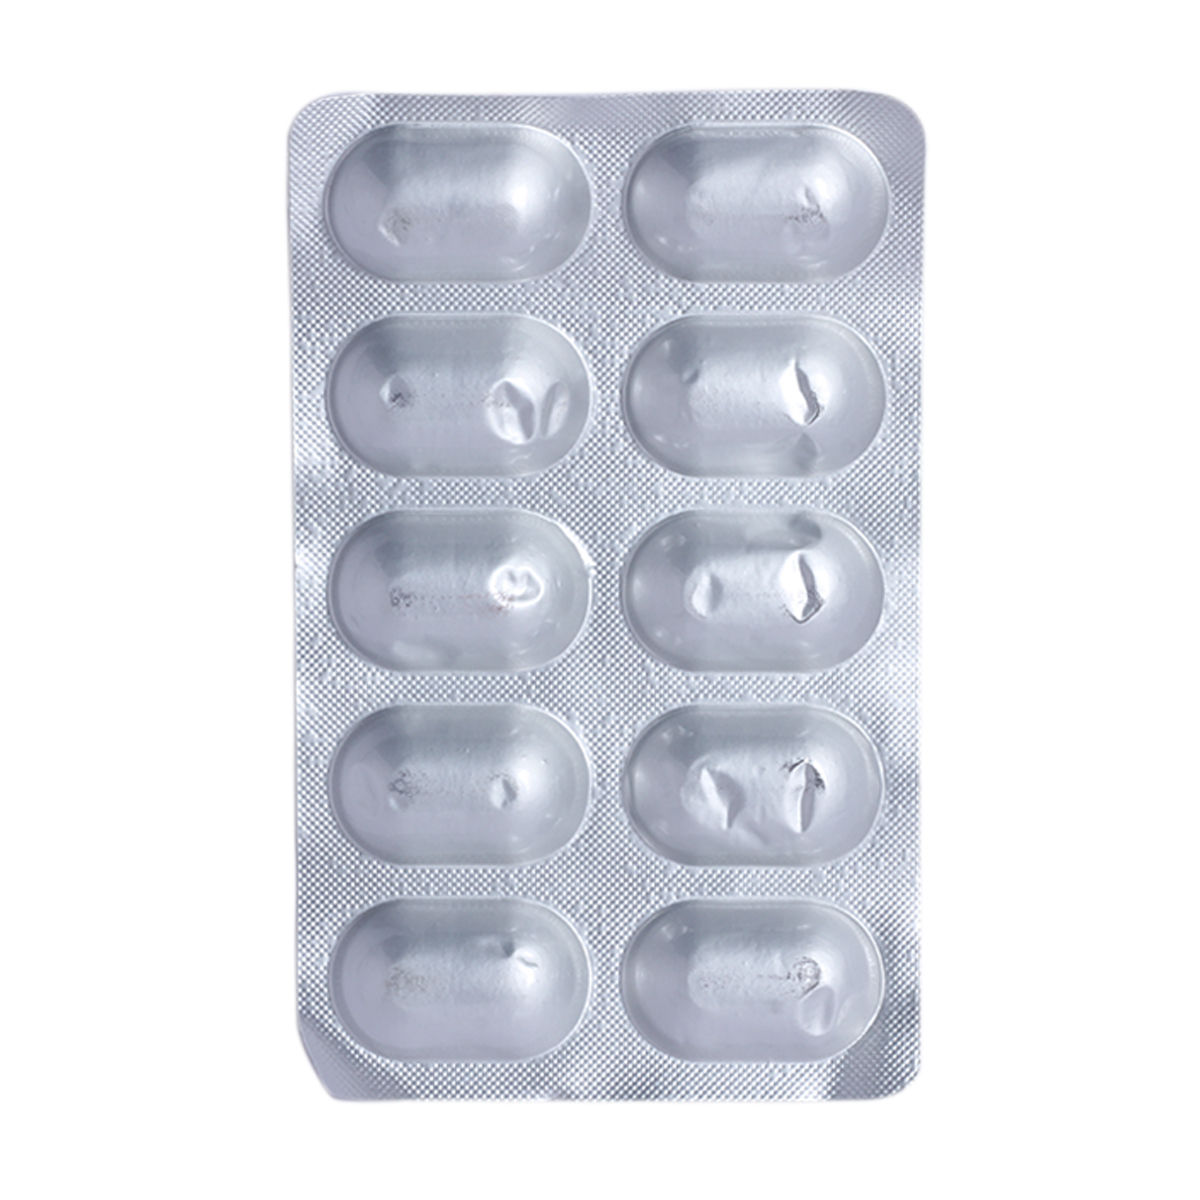 Glyten-M 1000 mg Tablet 10's, Pack of 10 TabletS